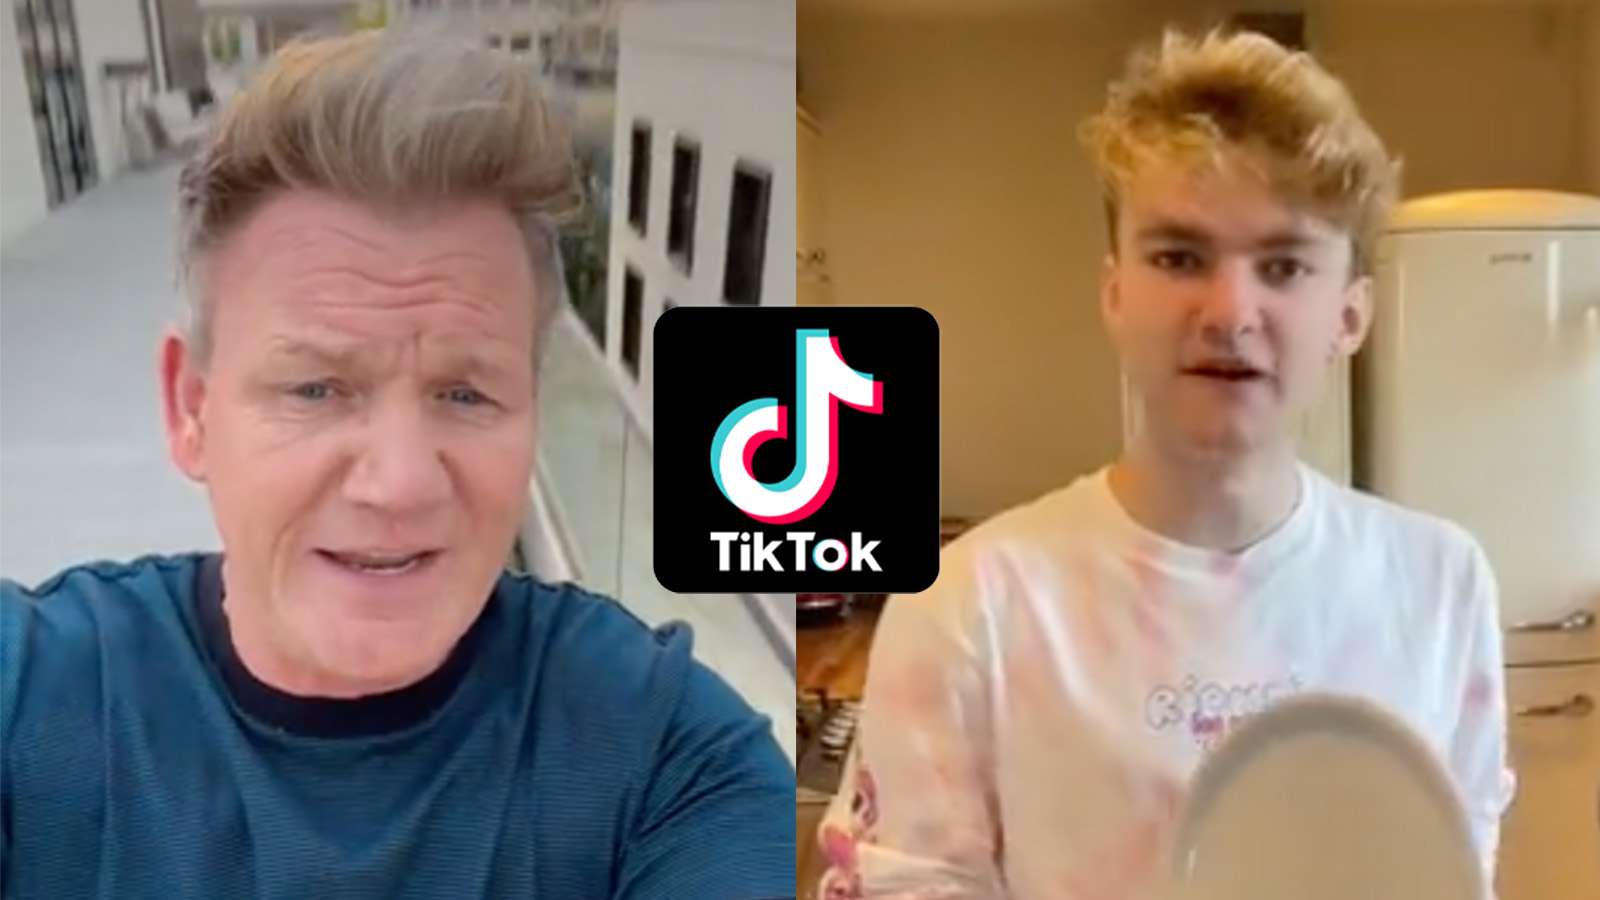 Gordon Ramsay next to TommyInnit with TikTok logo